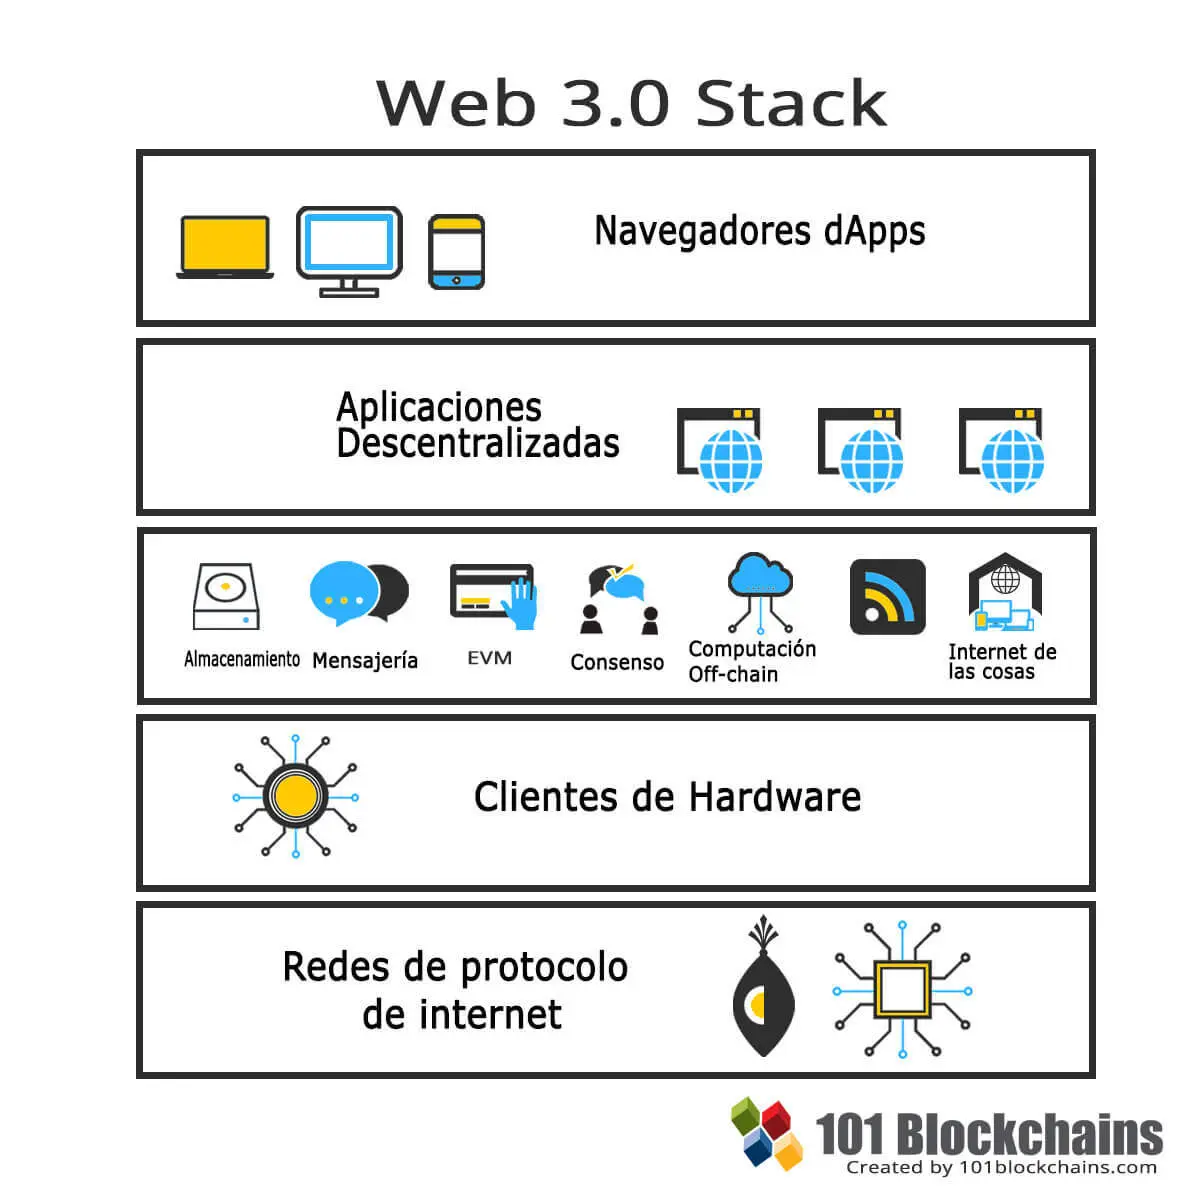 Web 3 Stack